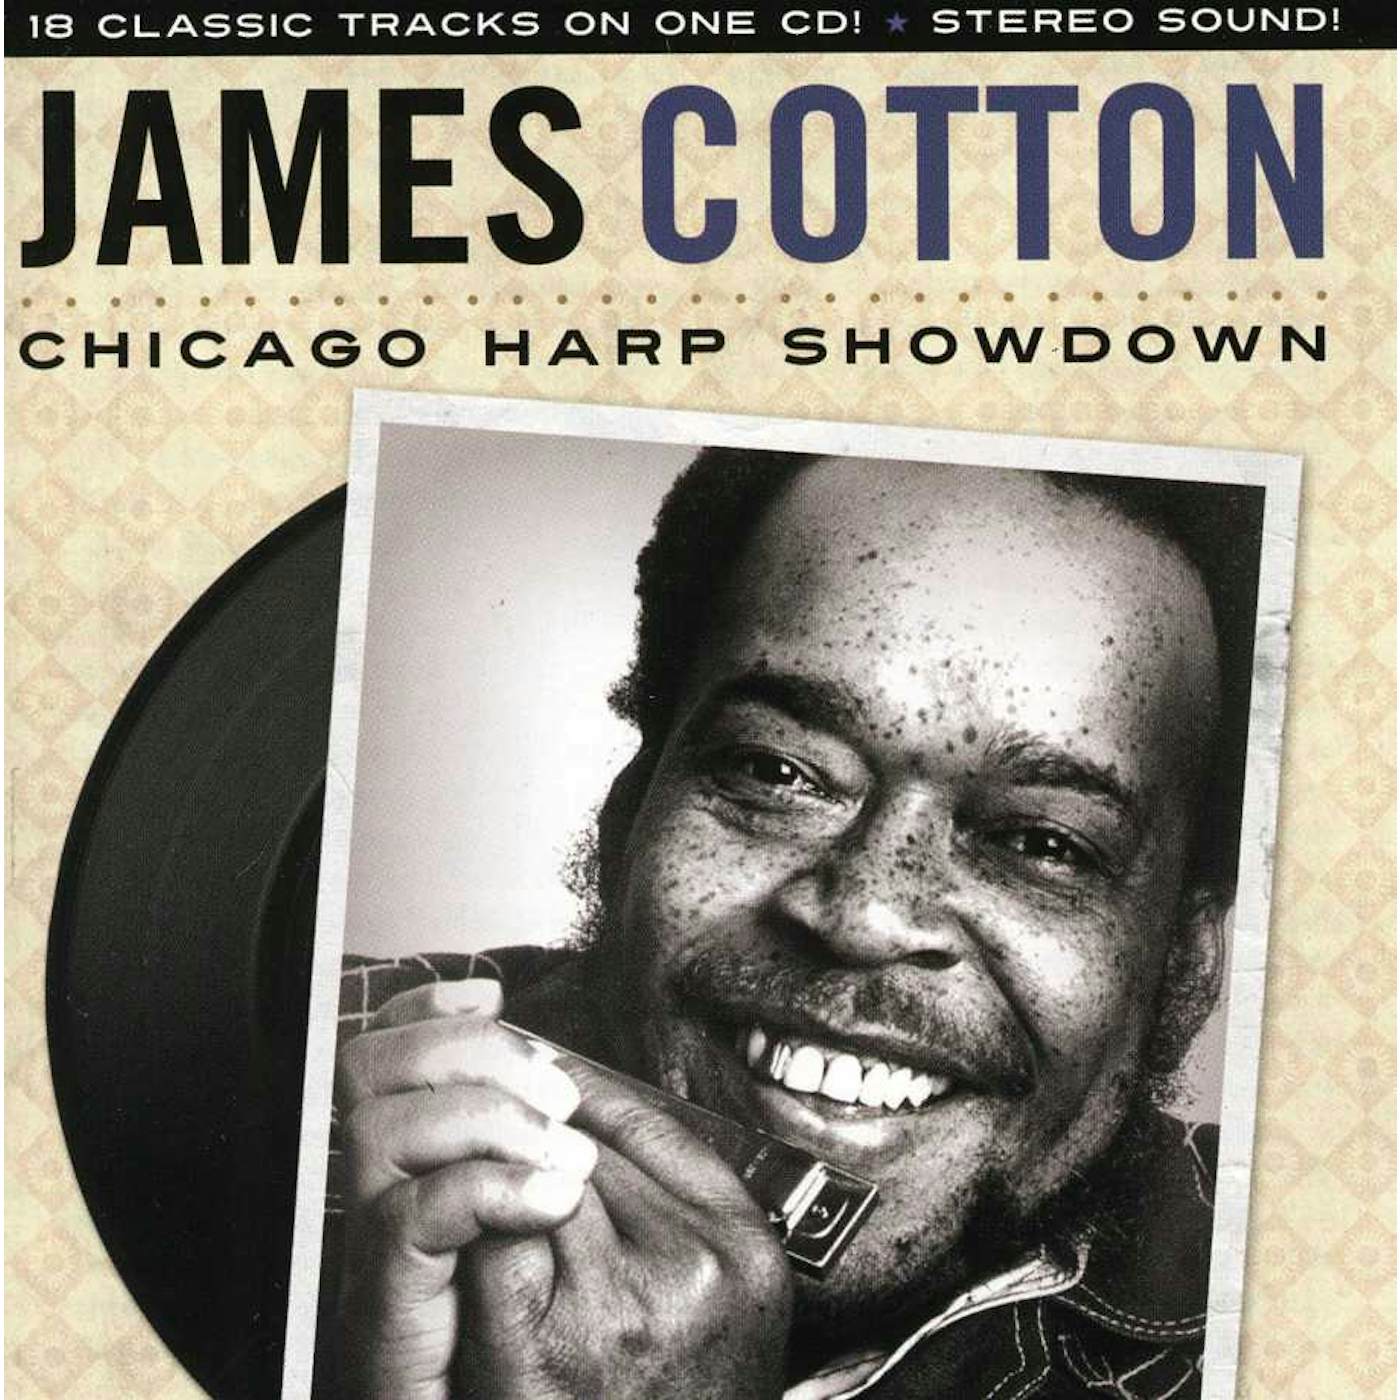 James Cotton CHICAGO HARP SHOWDOWN CD